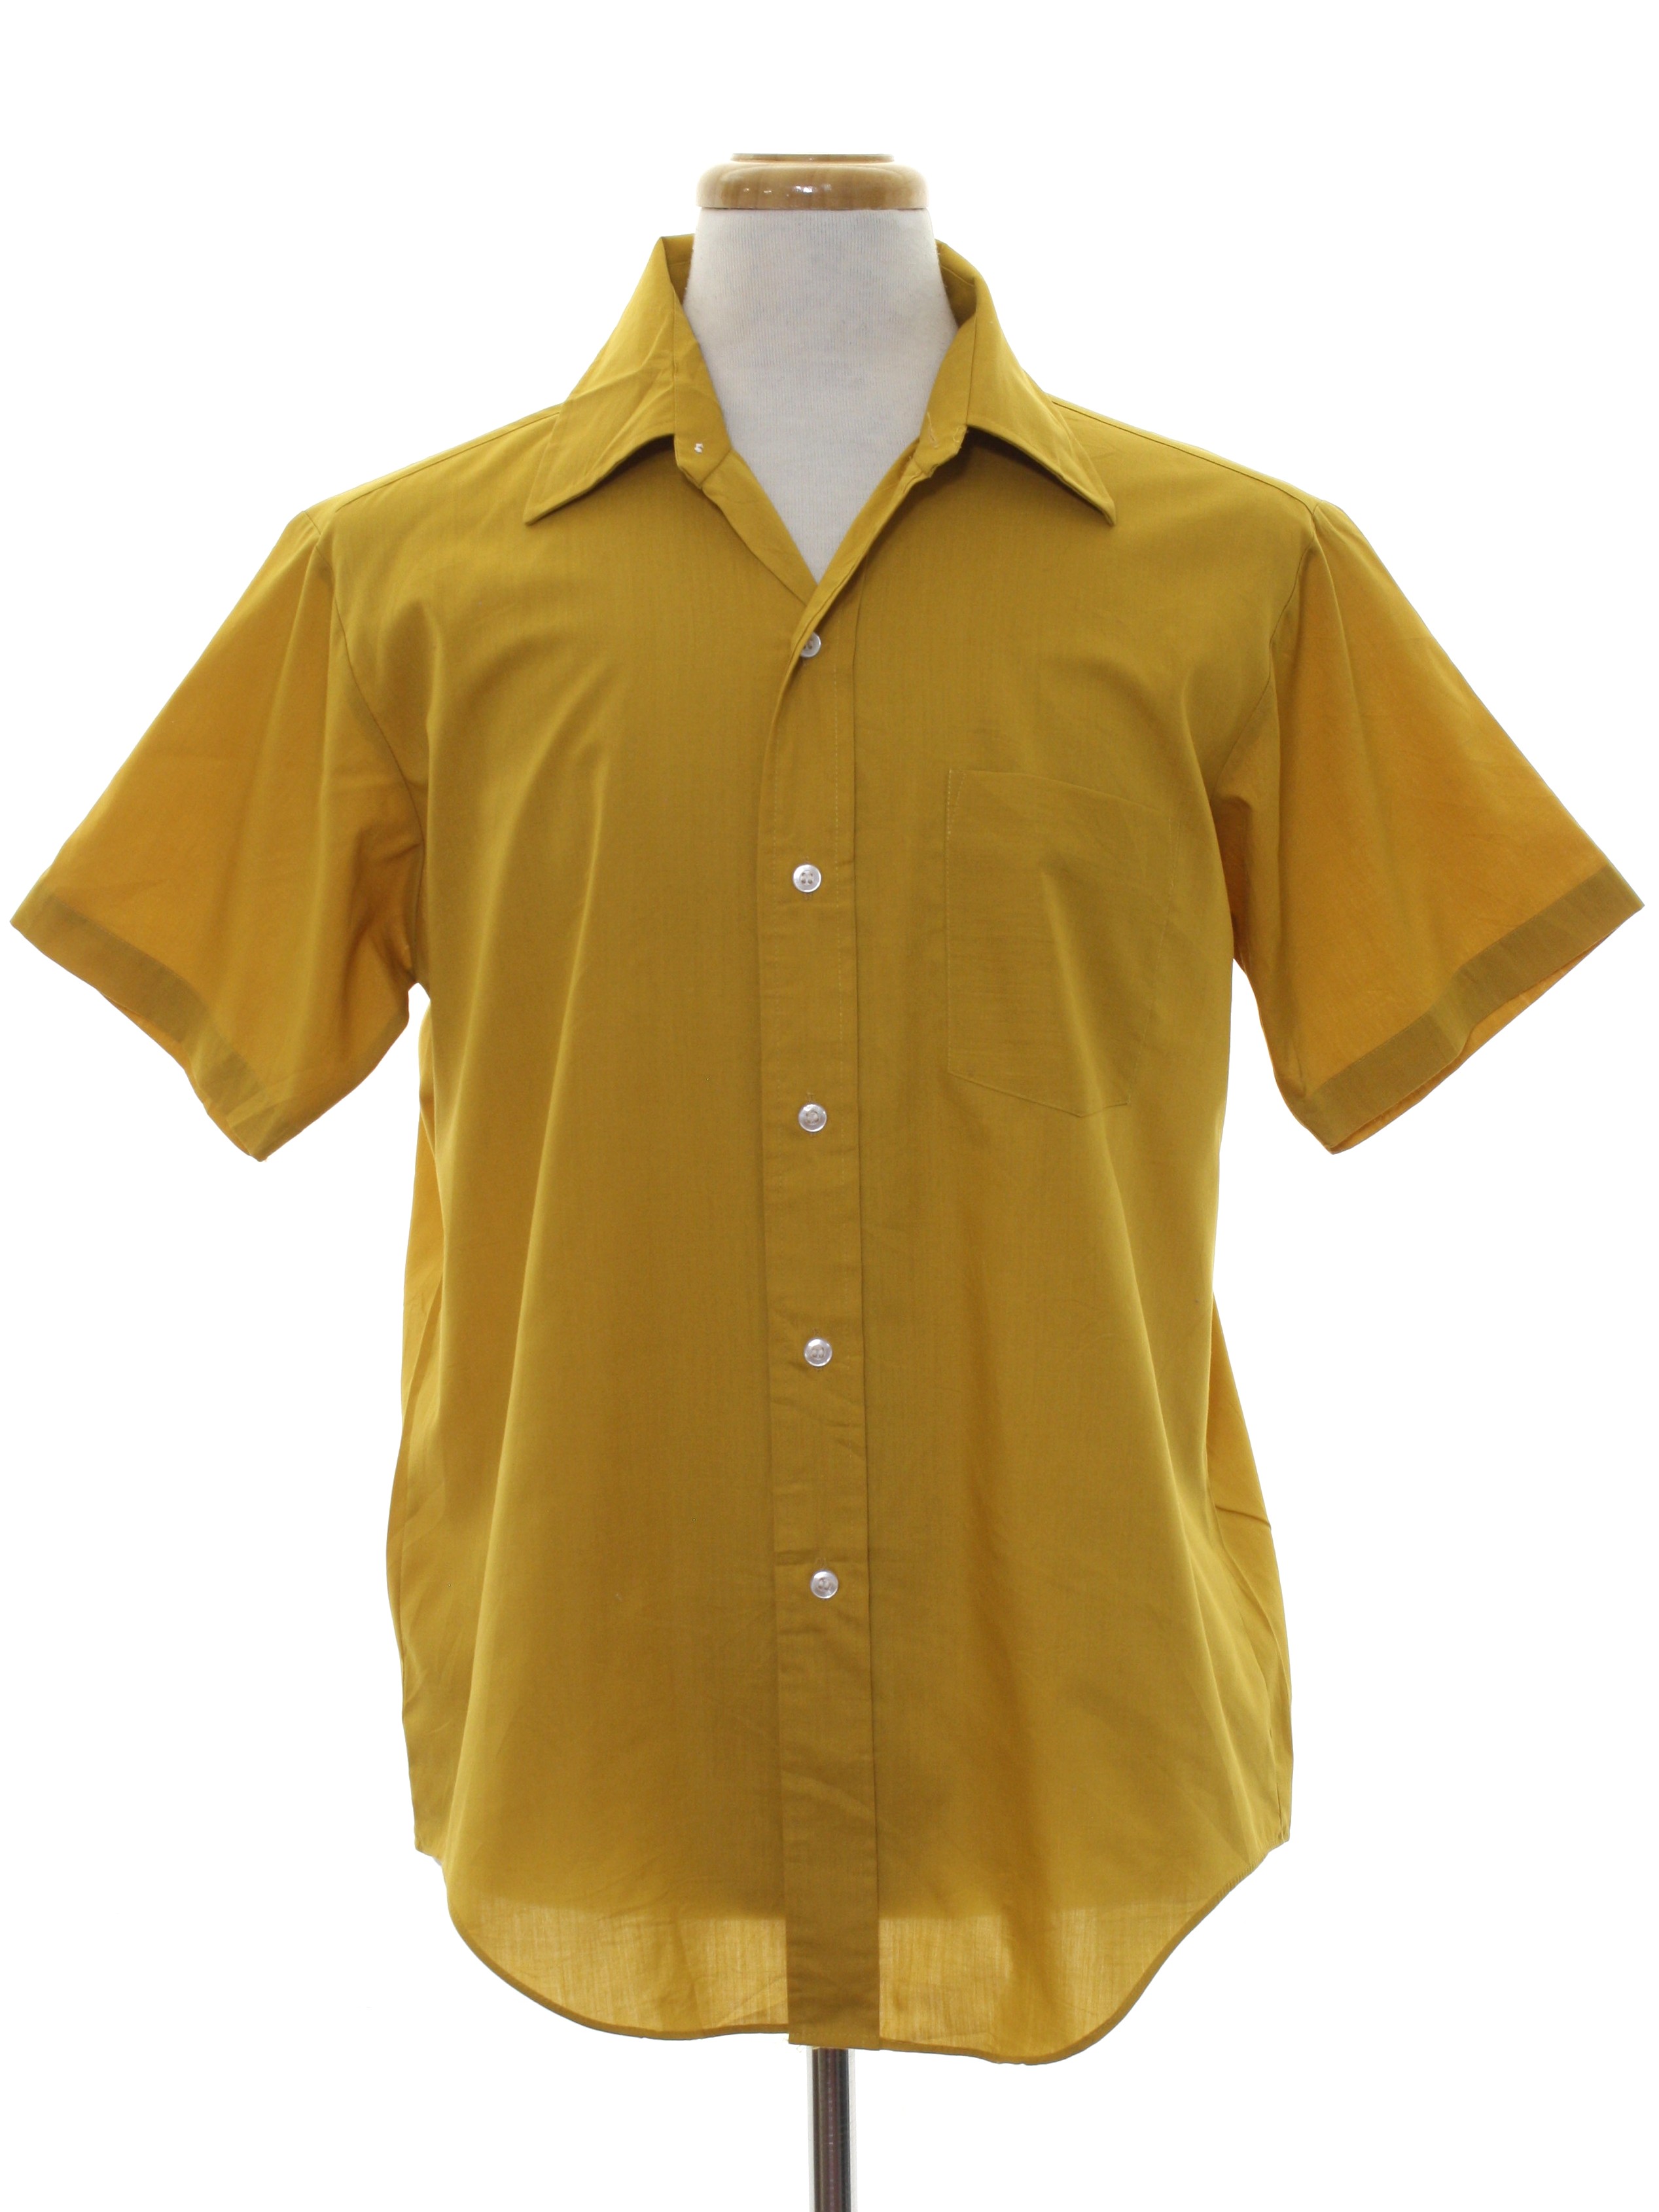 Tarval 60's Vintage Shirt: Late 60s or Early 70s -Tarval- Mens dijon ...